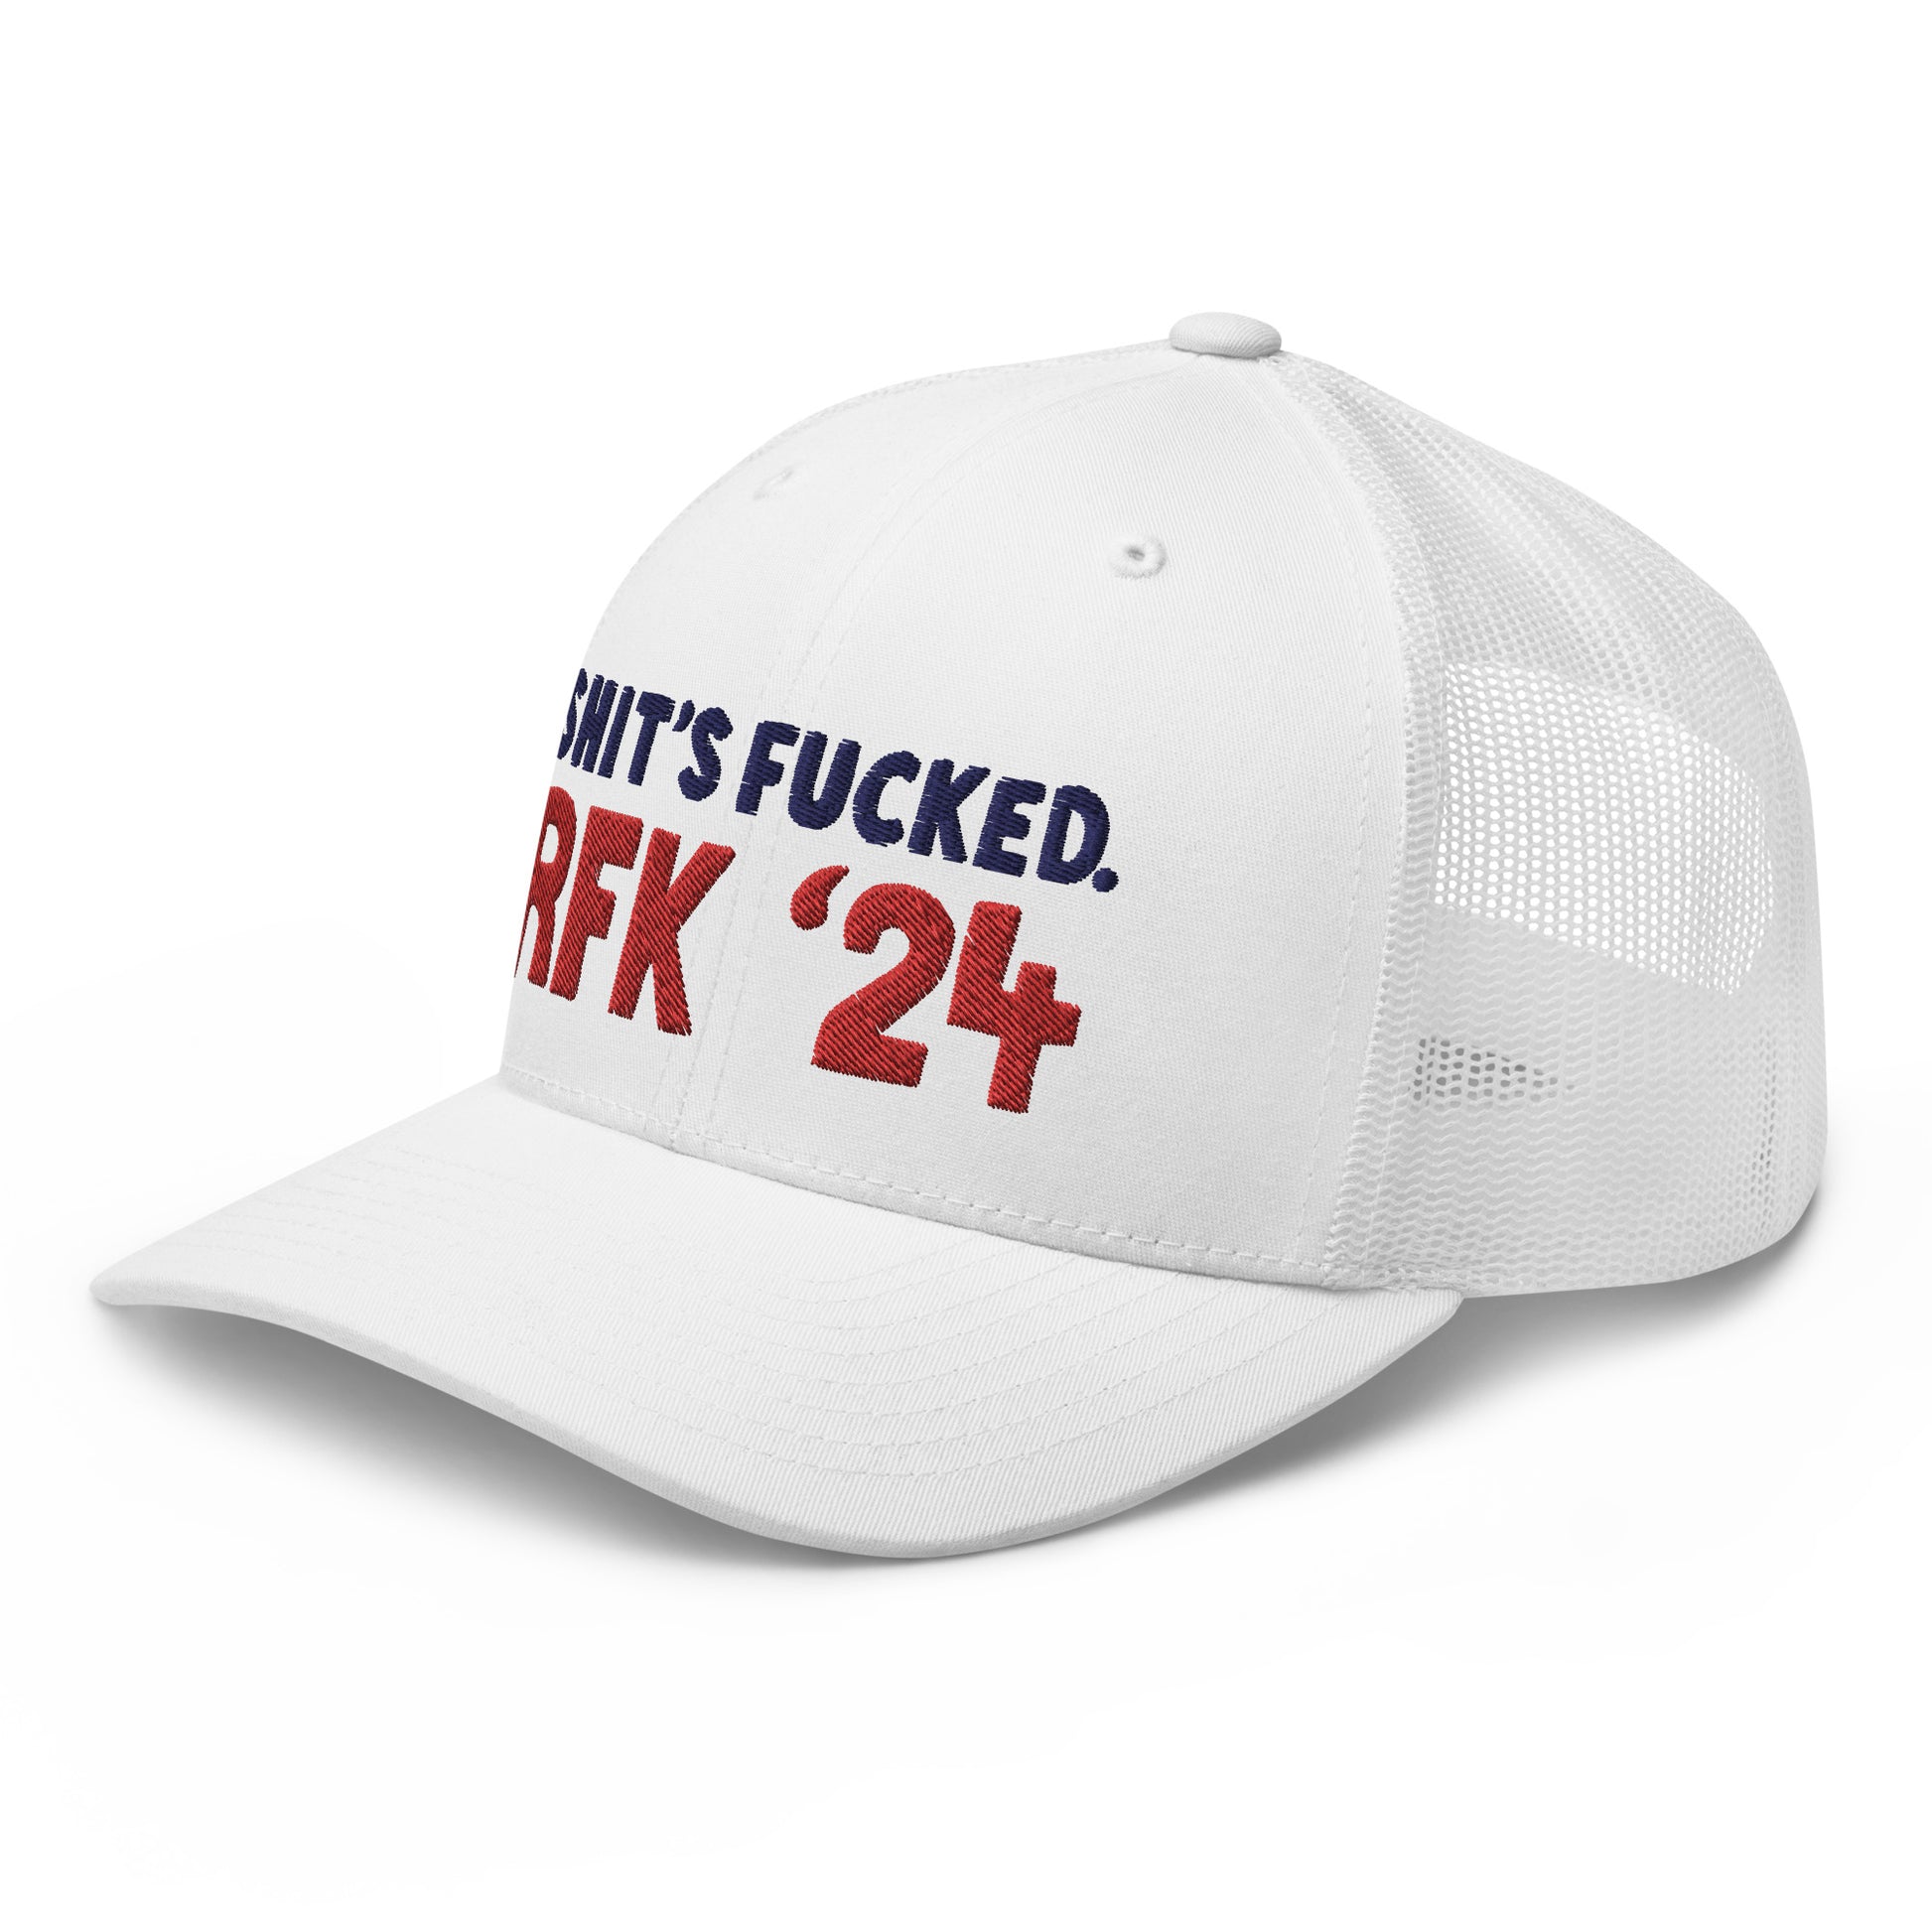 Hilarious hat that says shit's fucked RFK 24, funny joke hat